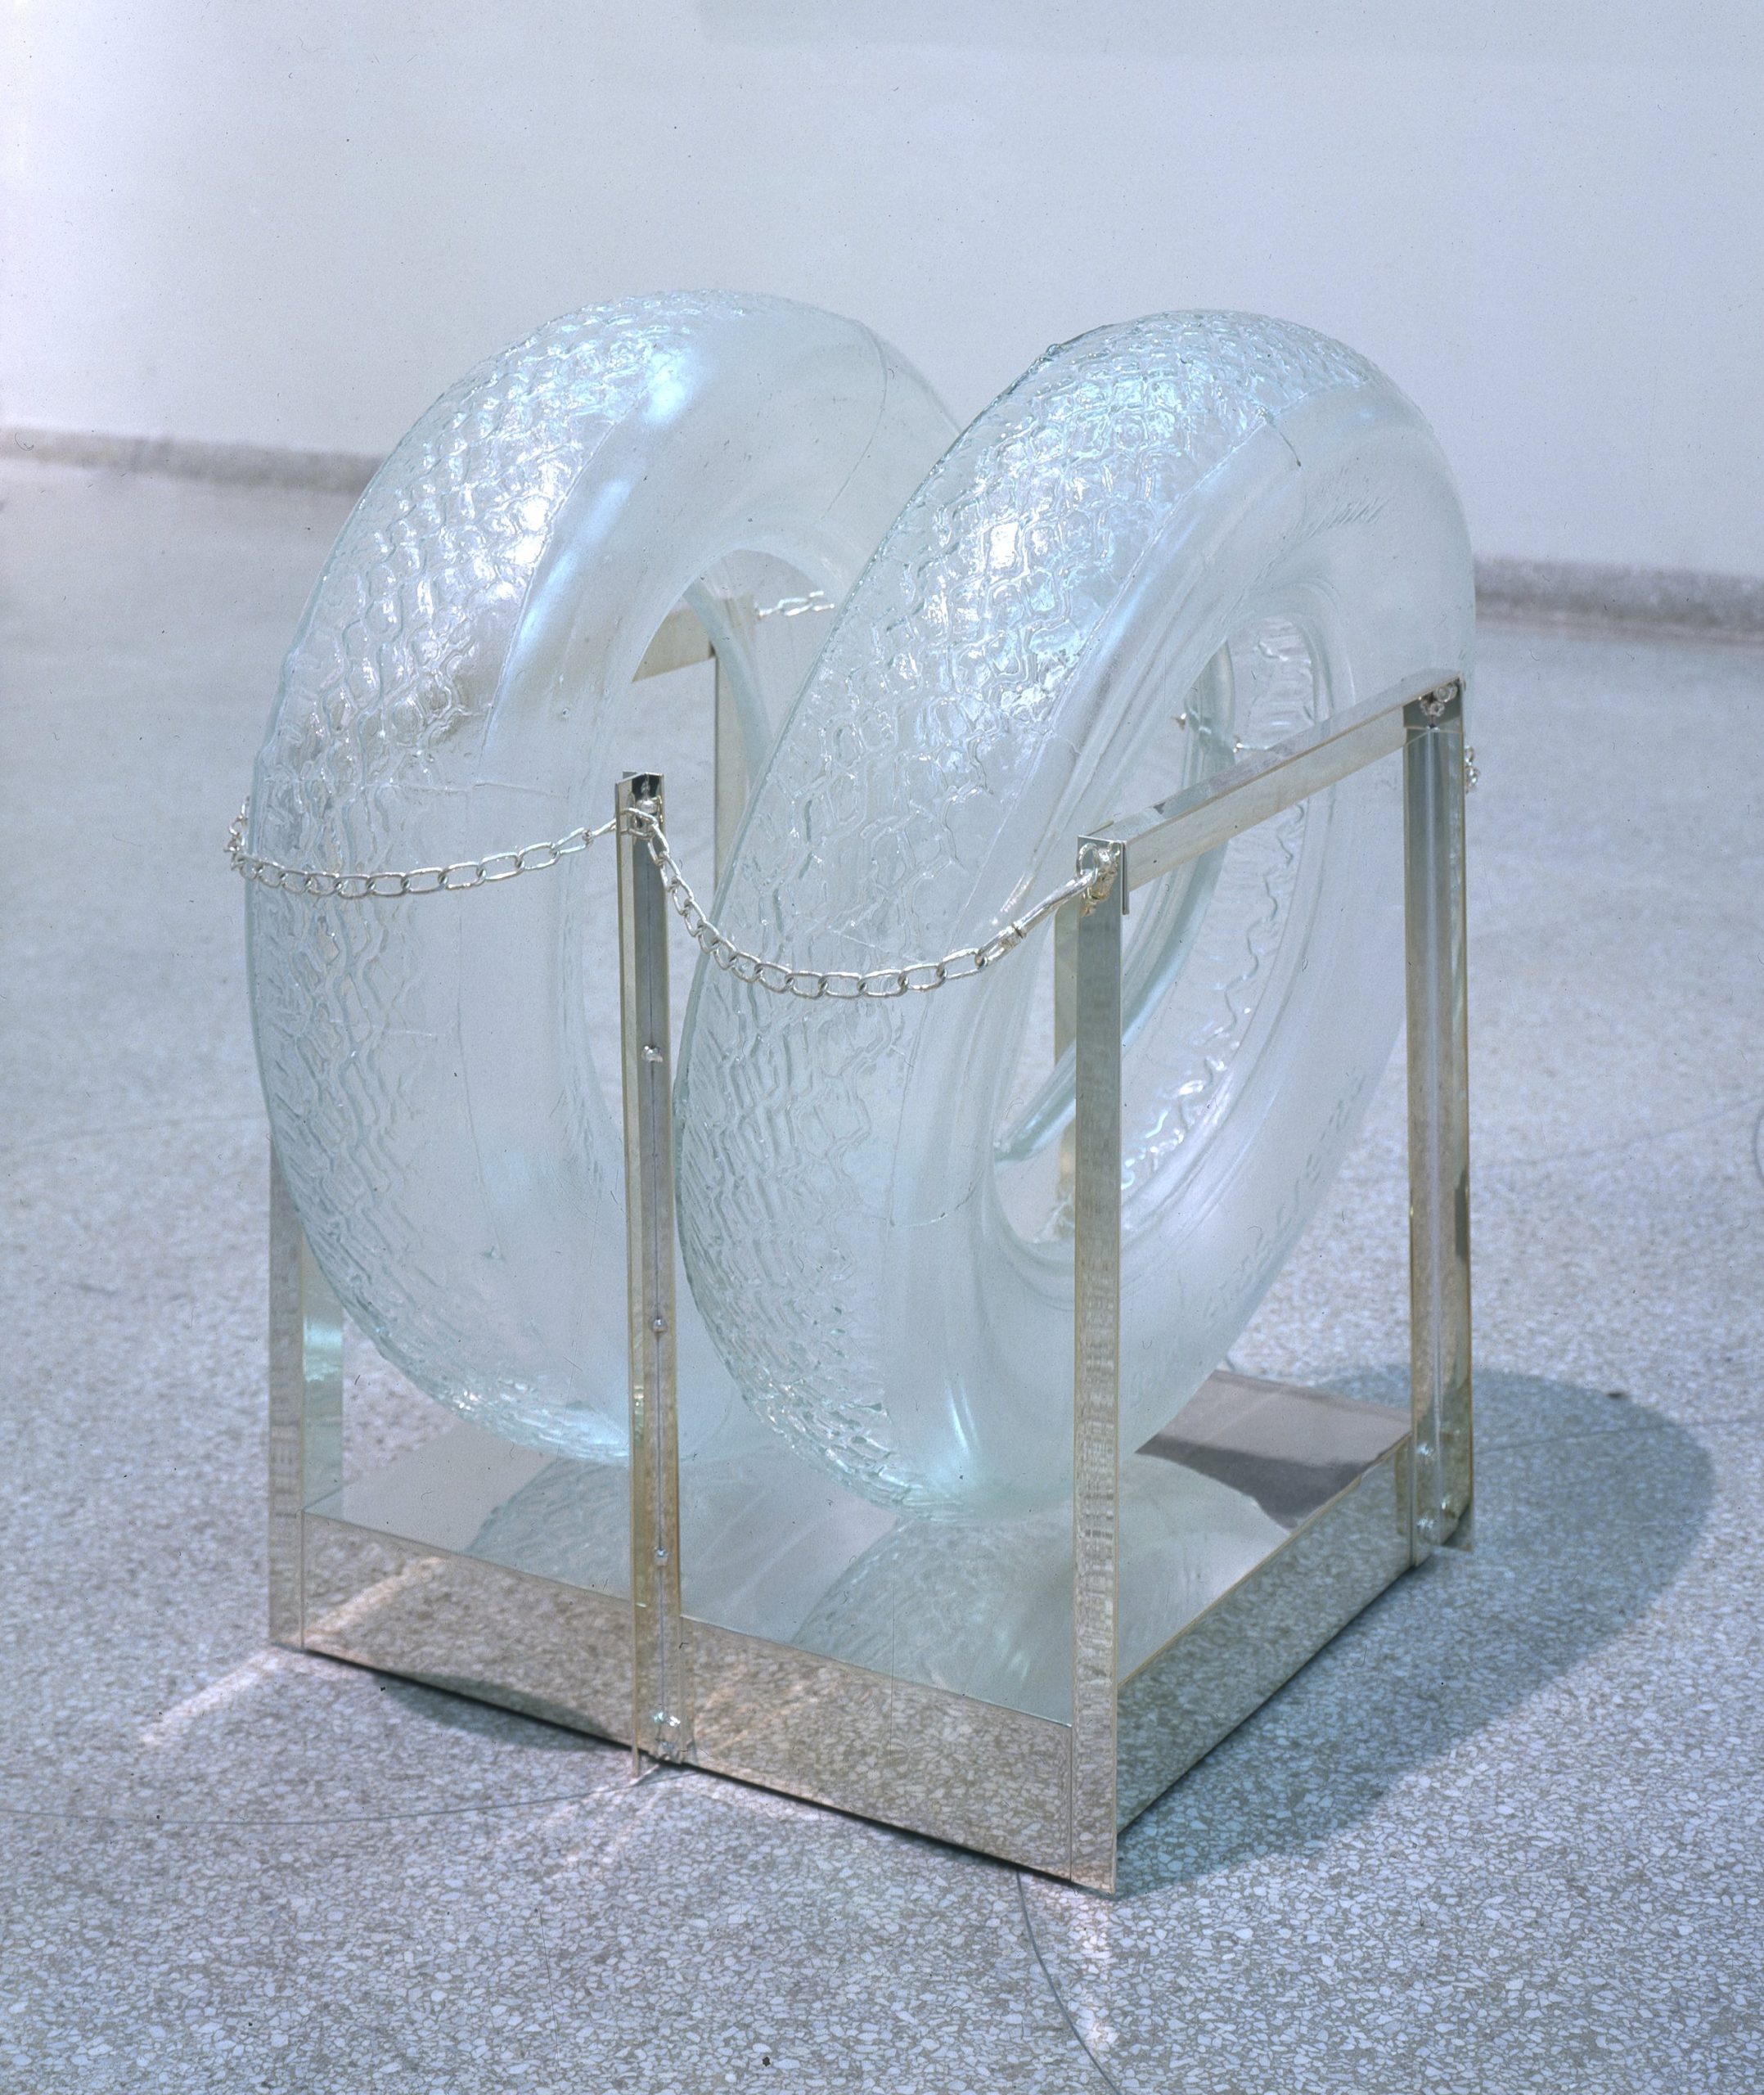 Robert Rauschenberg's Untitled [Glass Tires], 1997